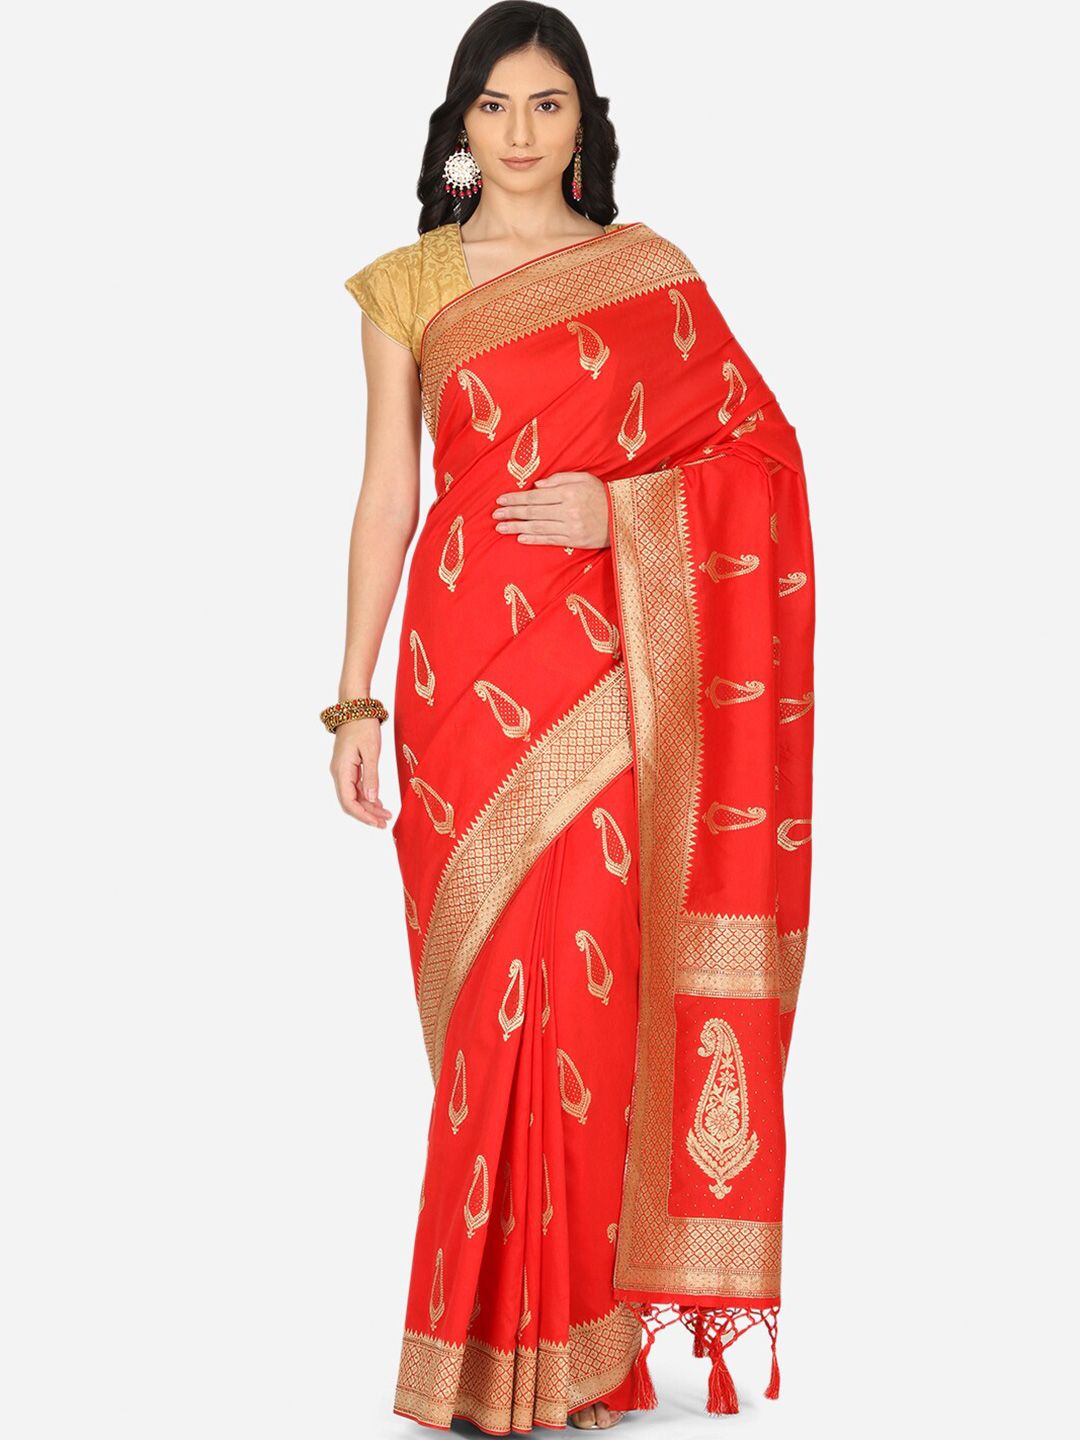 BOMBAY SELECTIONS Red & Gold Woven Design Banarasi Saree Price in India